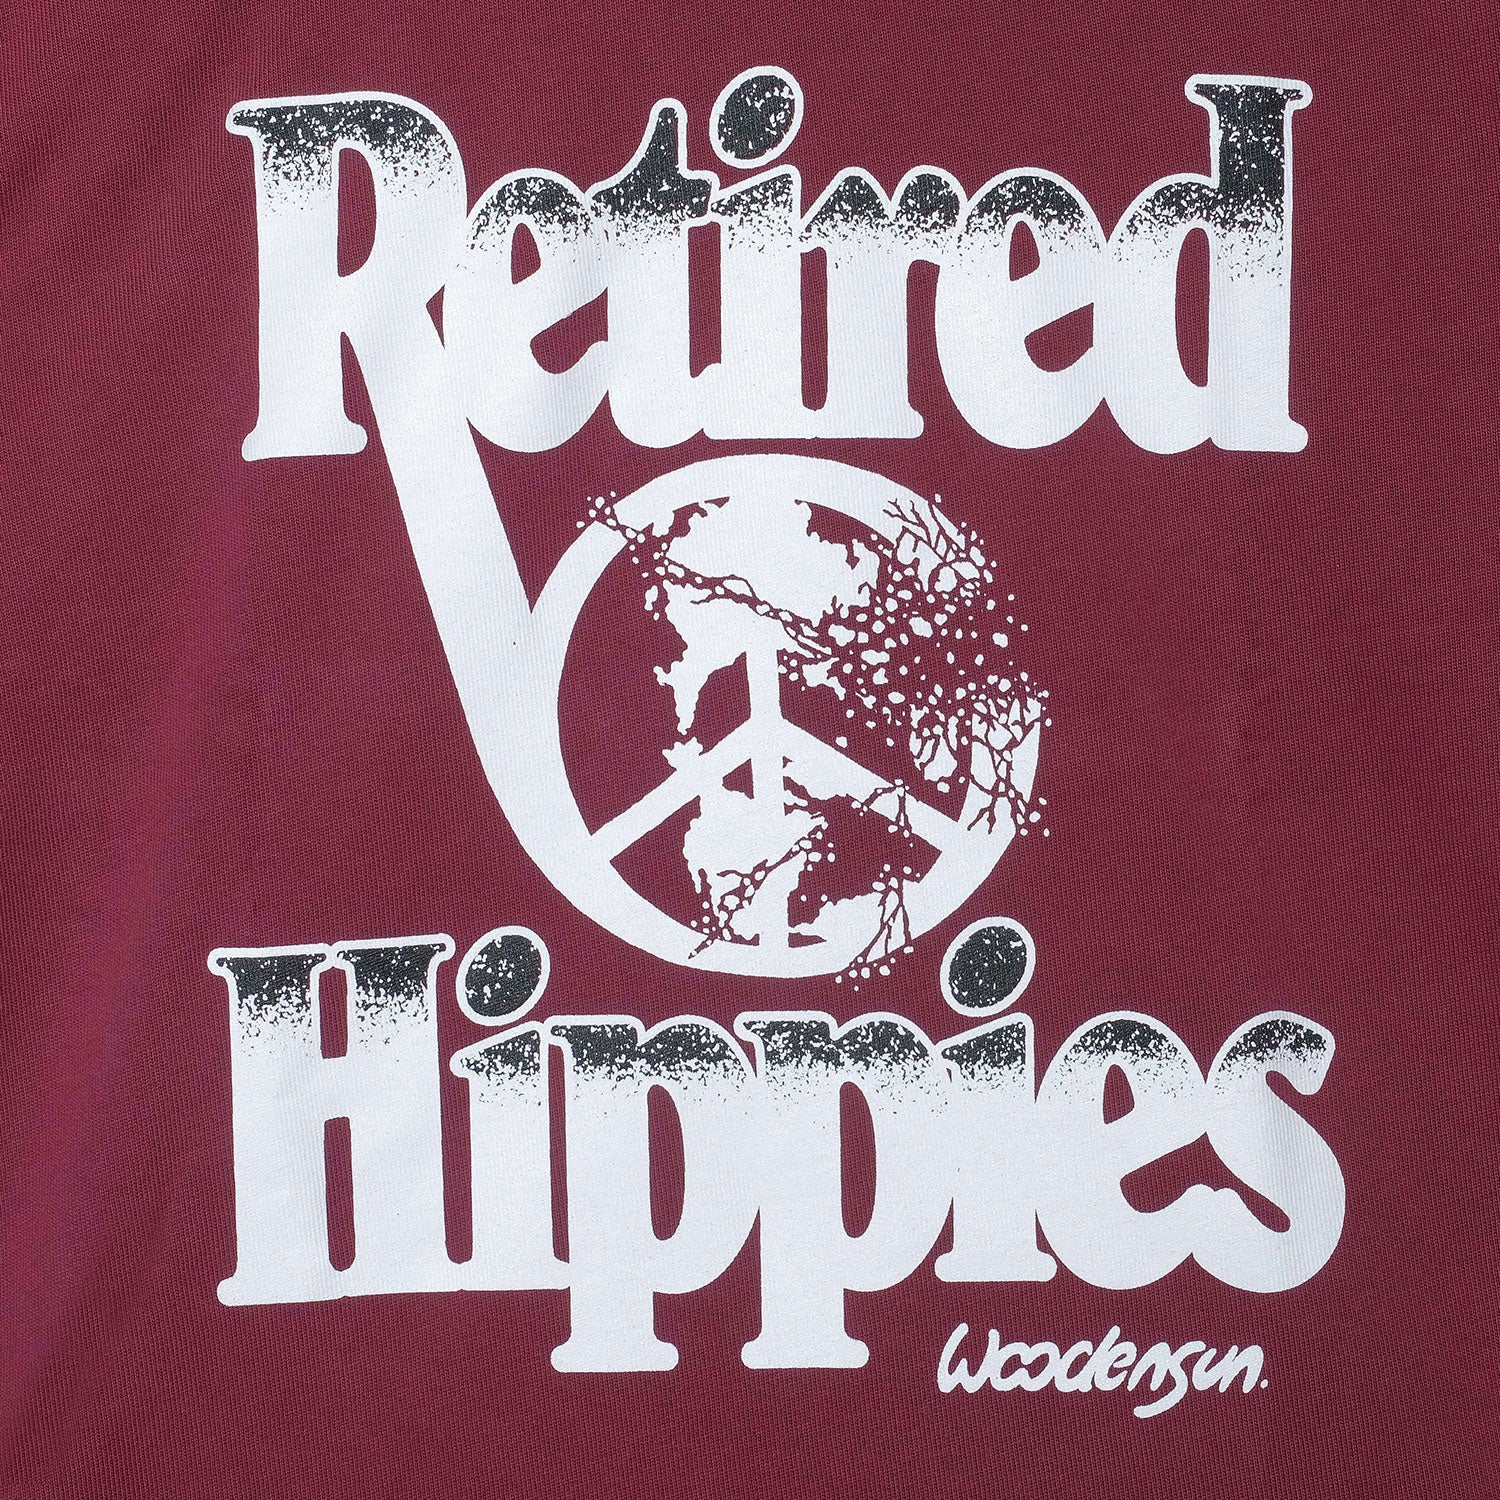 Retired Hippies - Shortsleeve T-Shirt